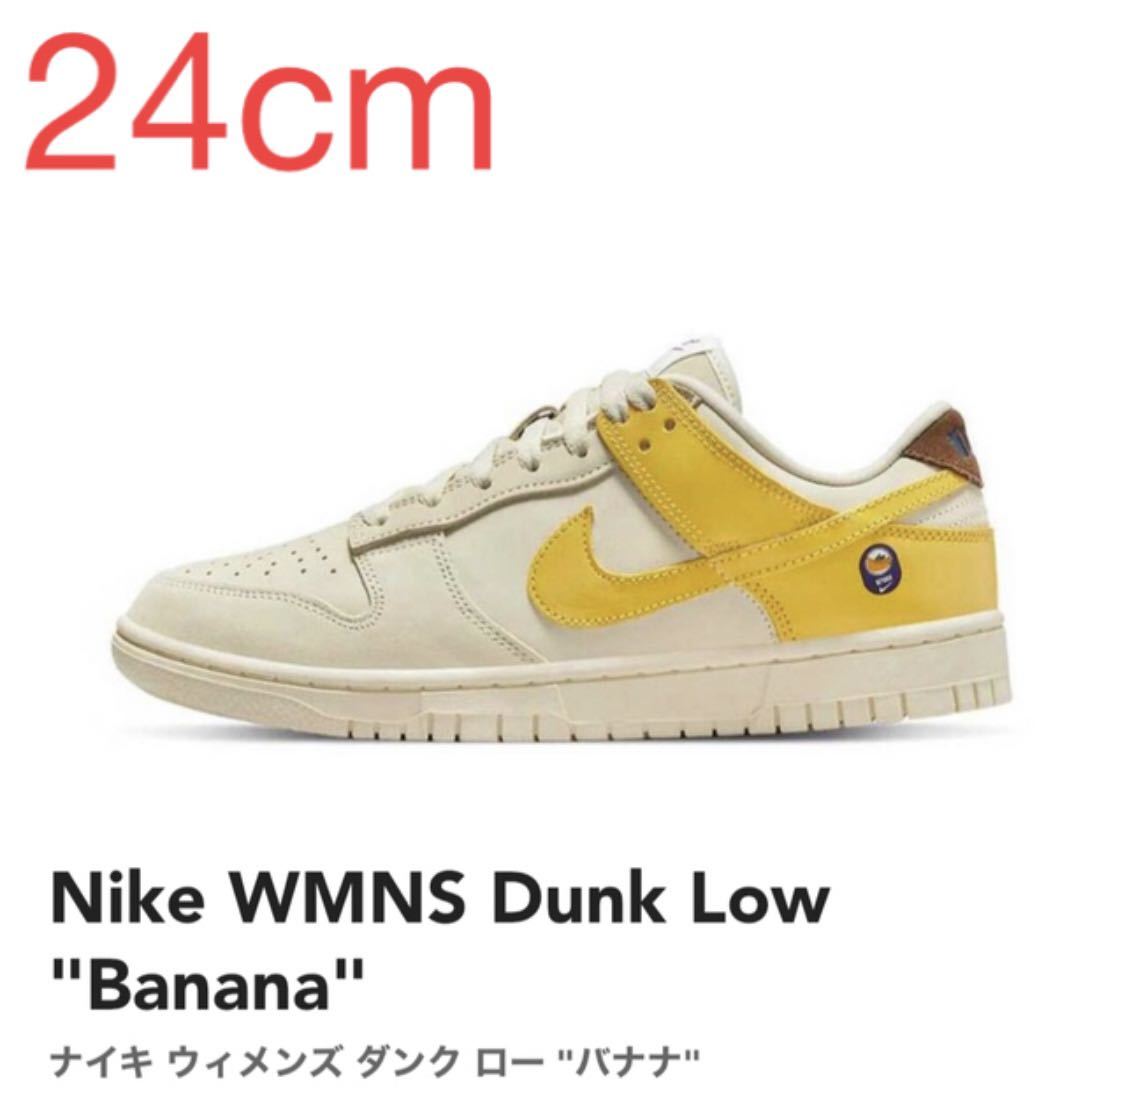 Nike WMNS Dunk Low Banana ナイキ ウィメンズ ダンク ロー バナナ